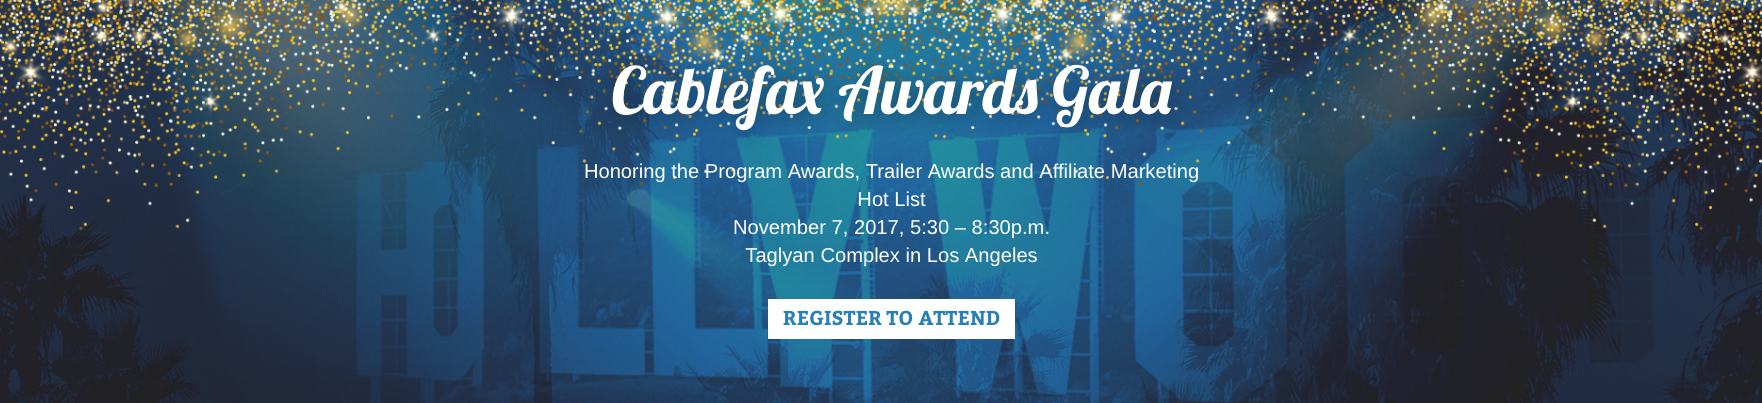 Cablefax Awards Gala 2017